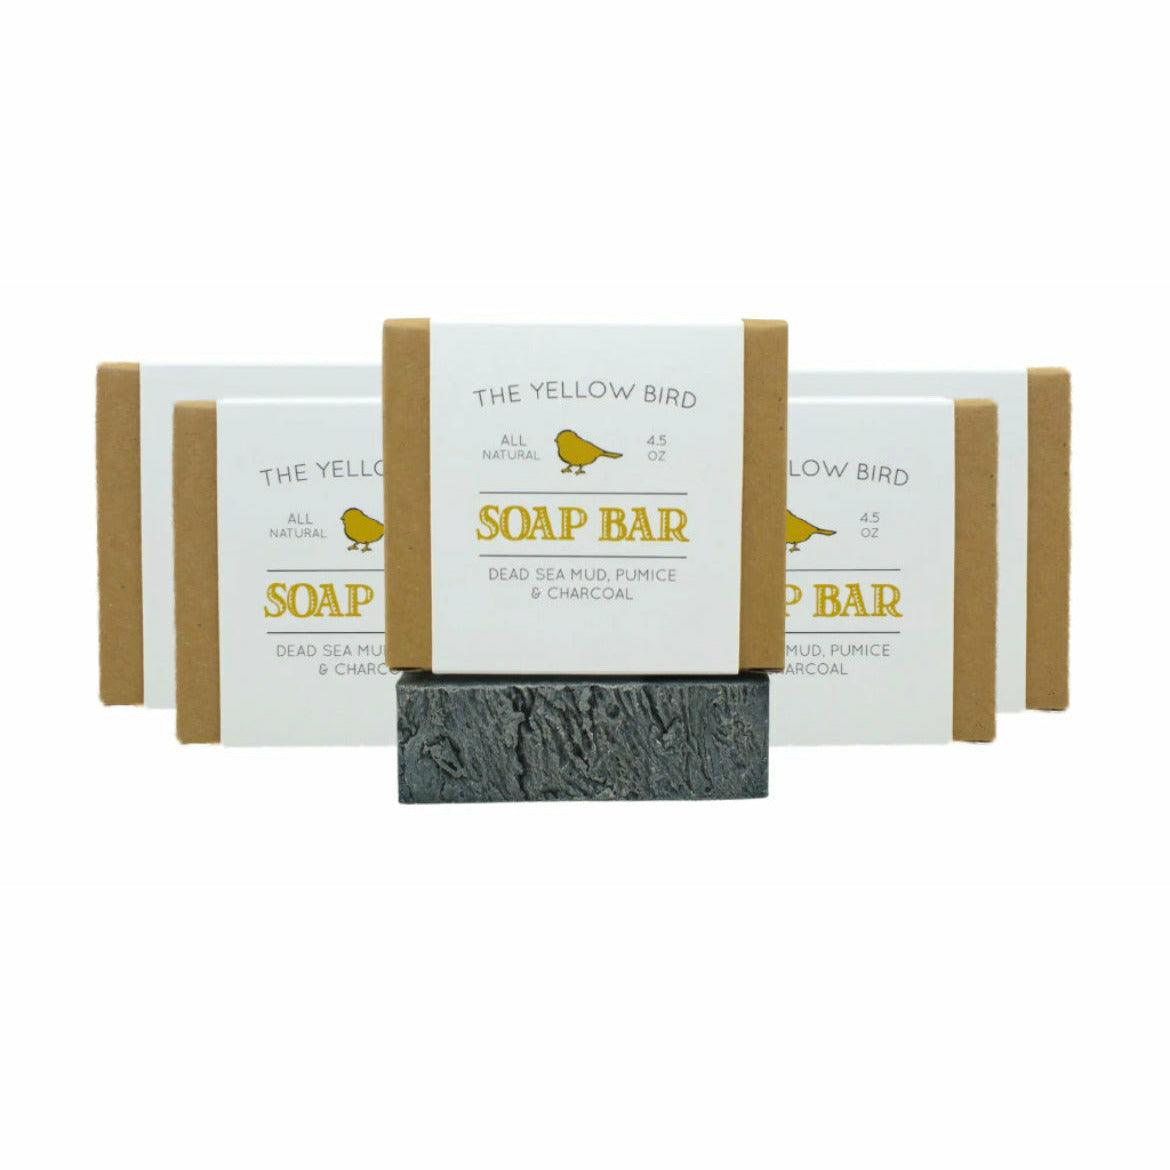 Dead Sea Mud, Pumice & Charcoal Soap Bar - Ninth & Pine